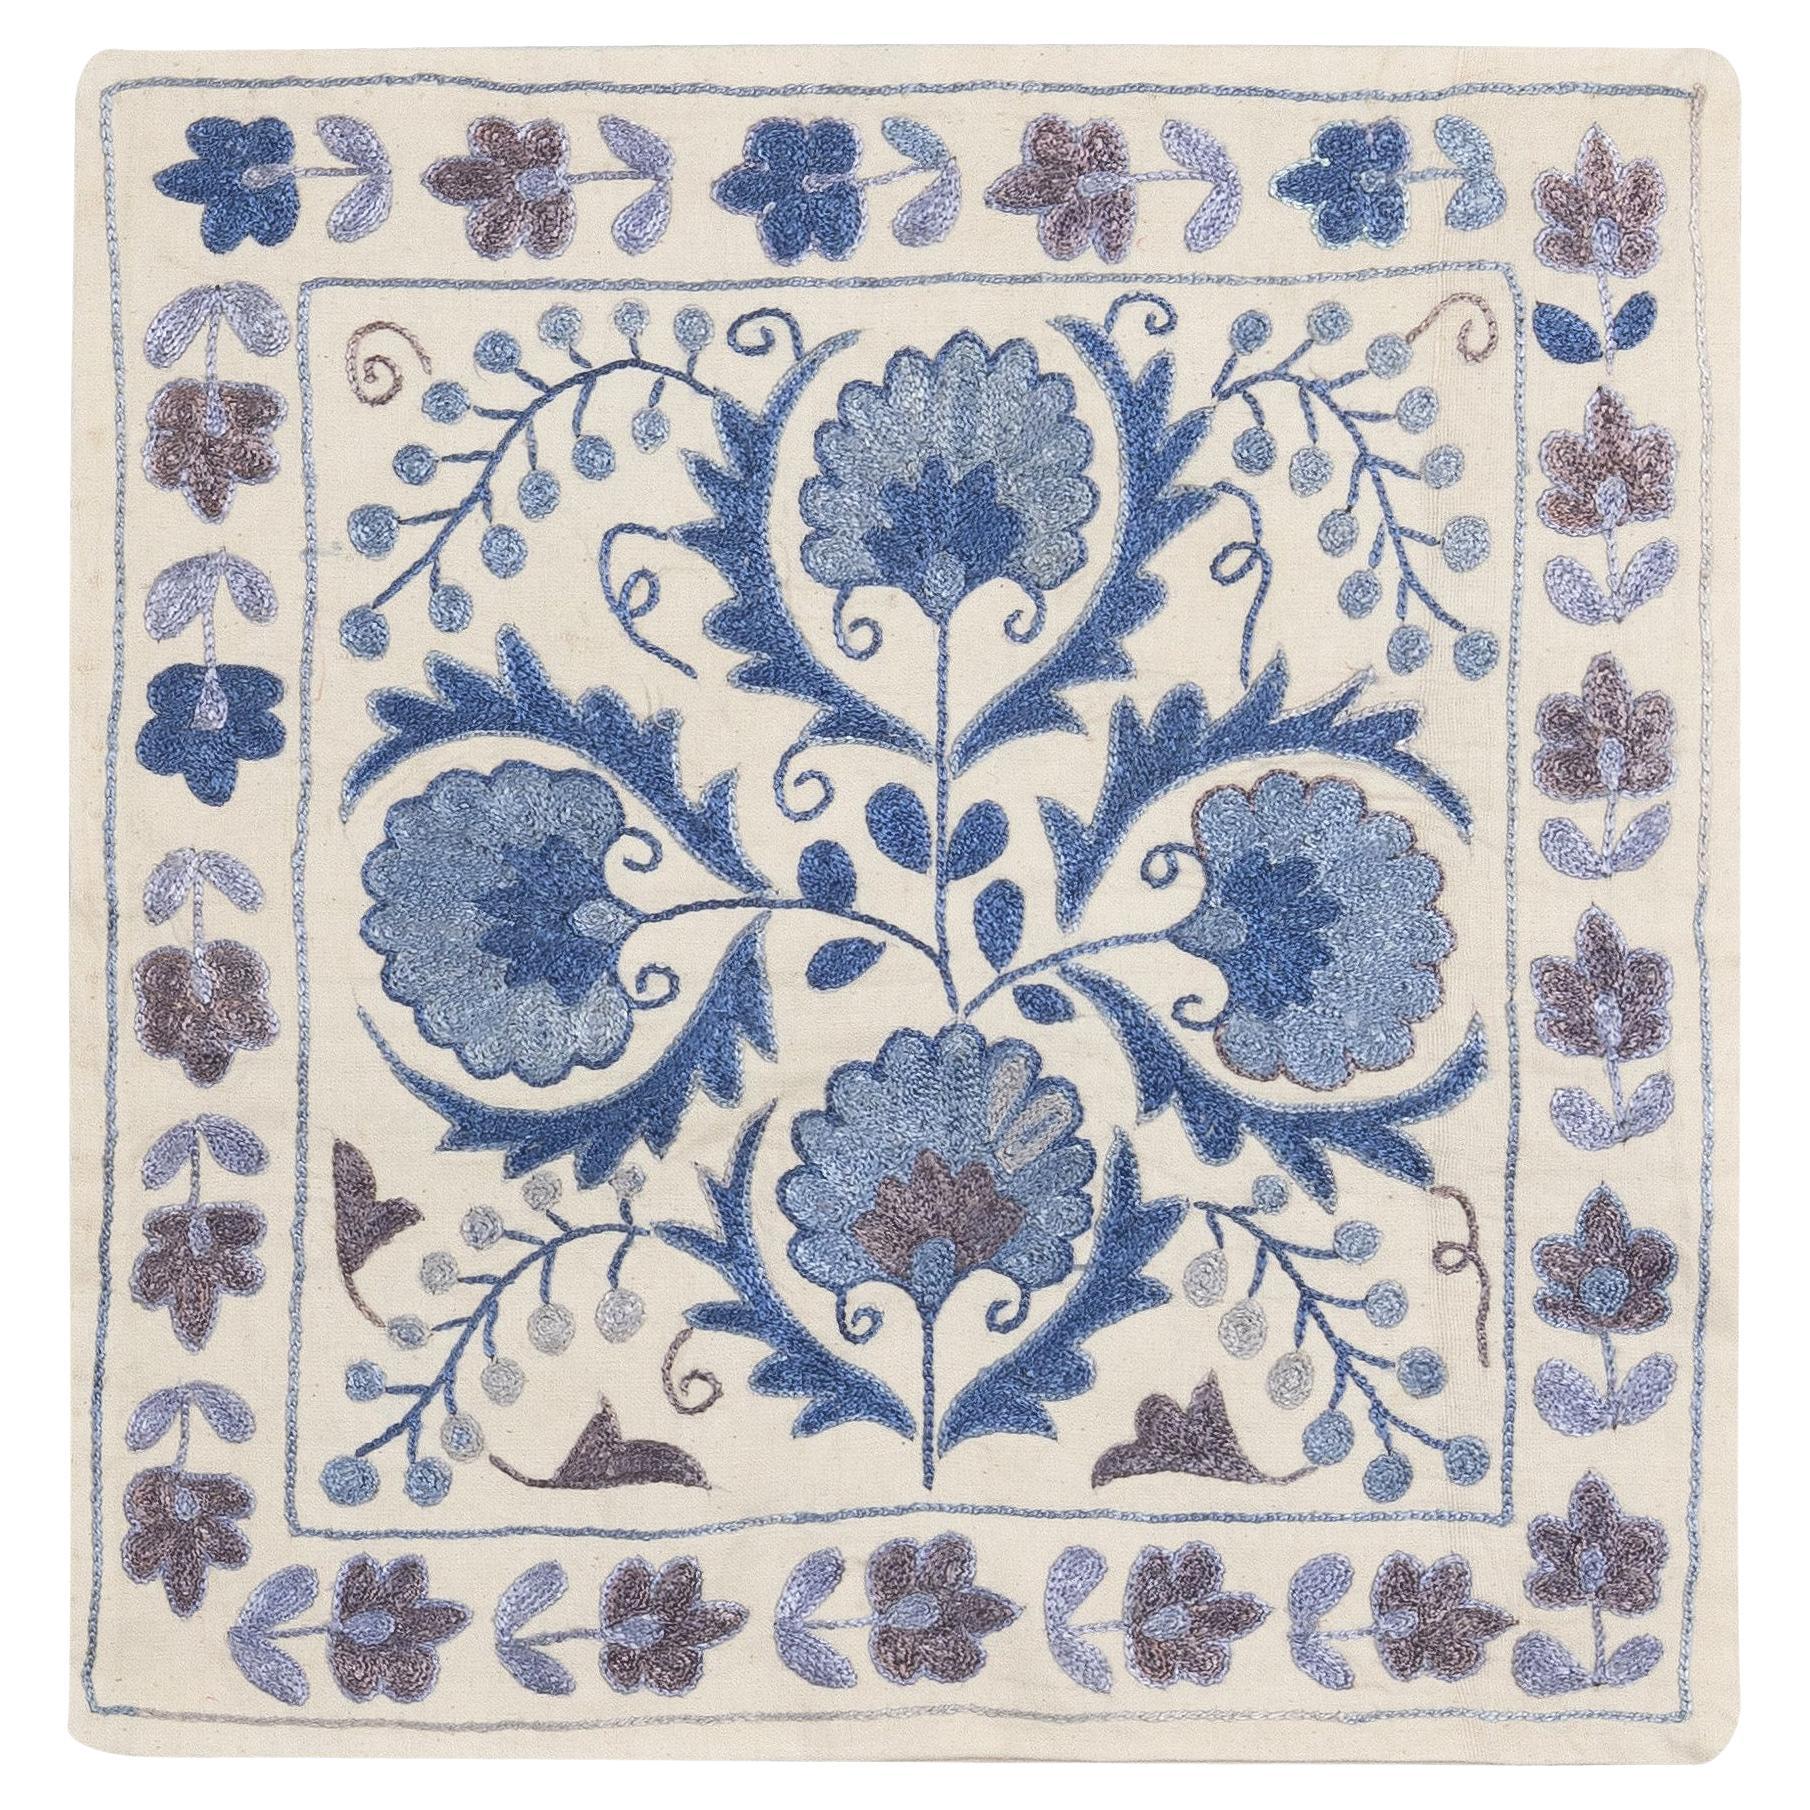 18"x18" Handmade New Uzbek Silk Embroidered Suzani Cushion Cover in Blue & Cream